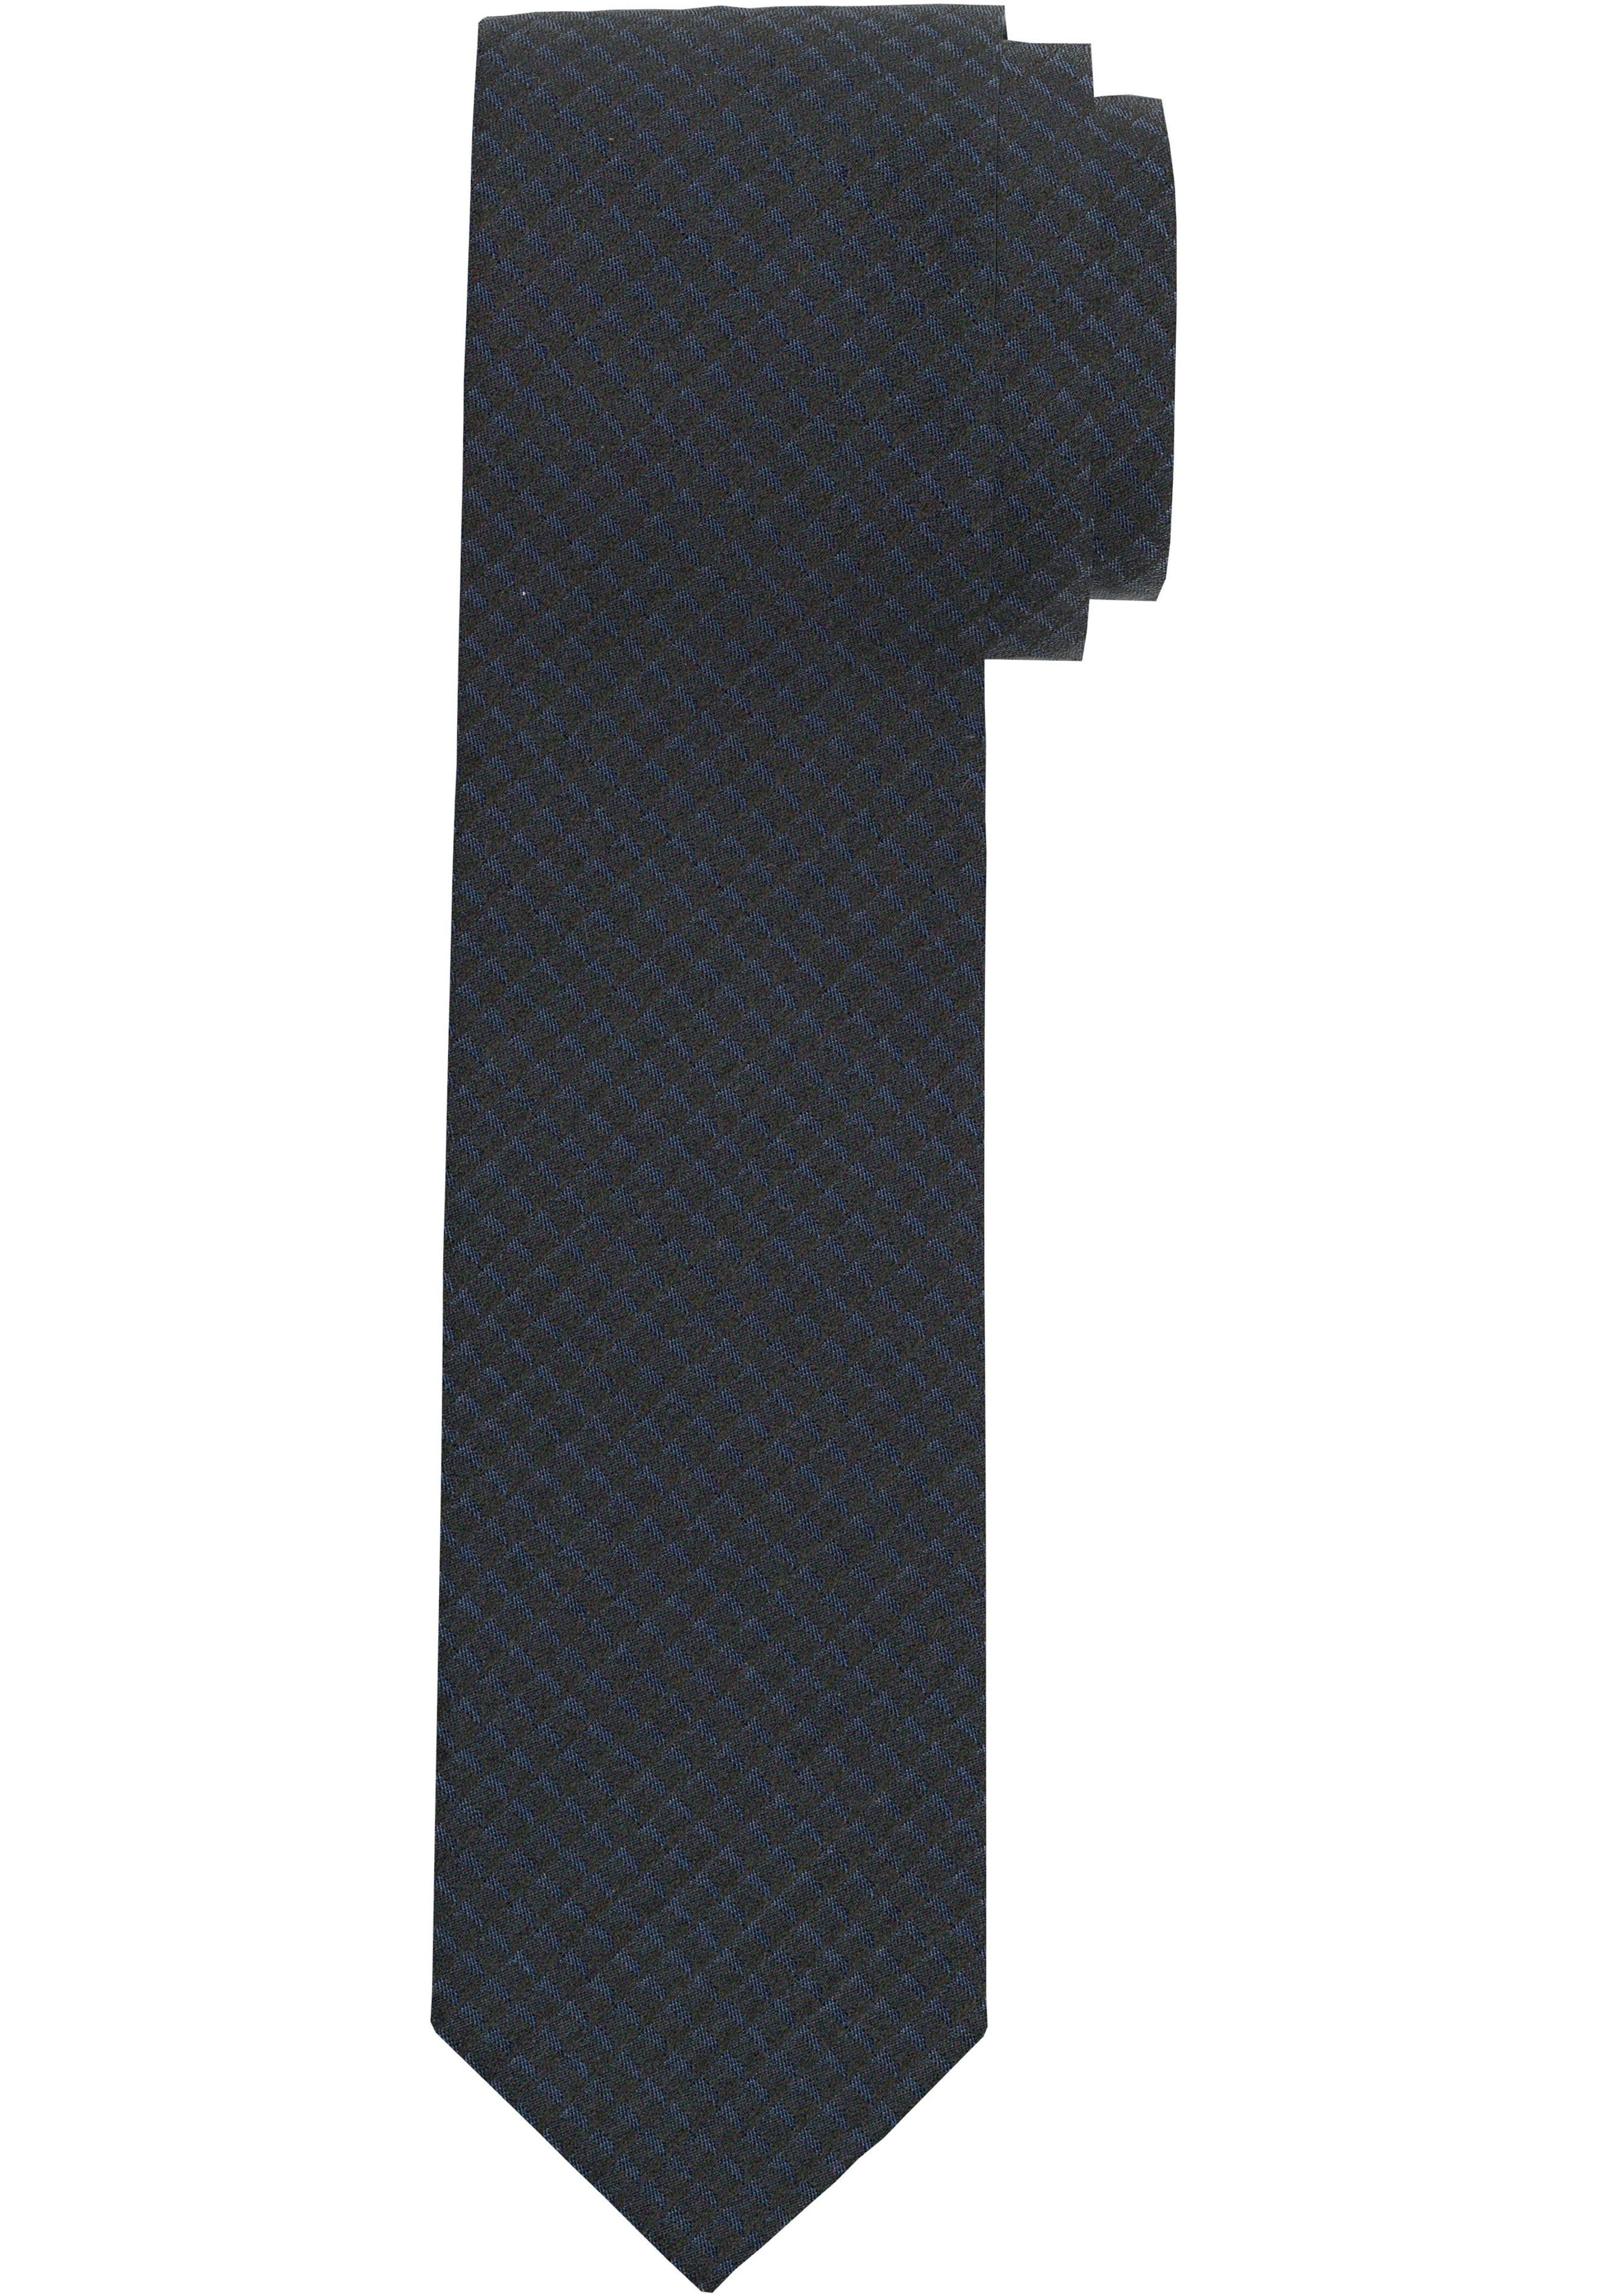 OLYMP Krawatte Krawatte marine Strukturmuster mit